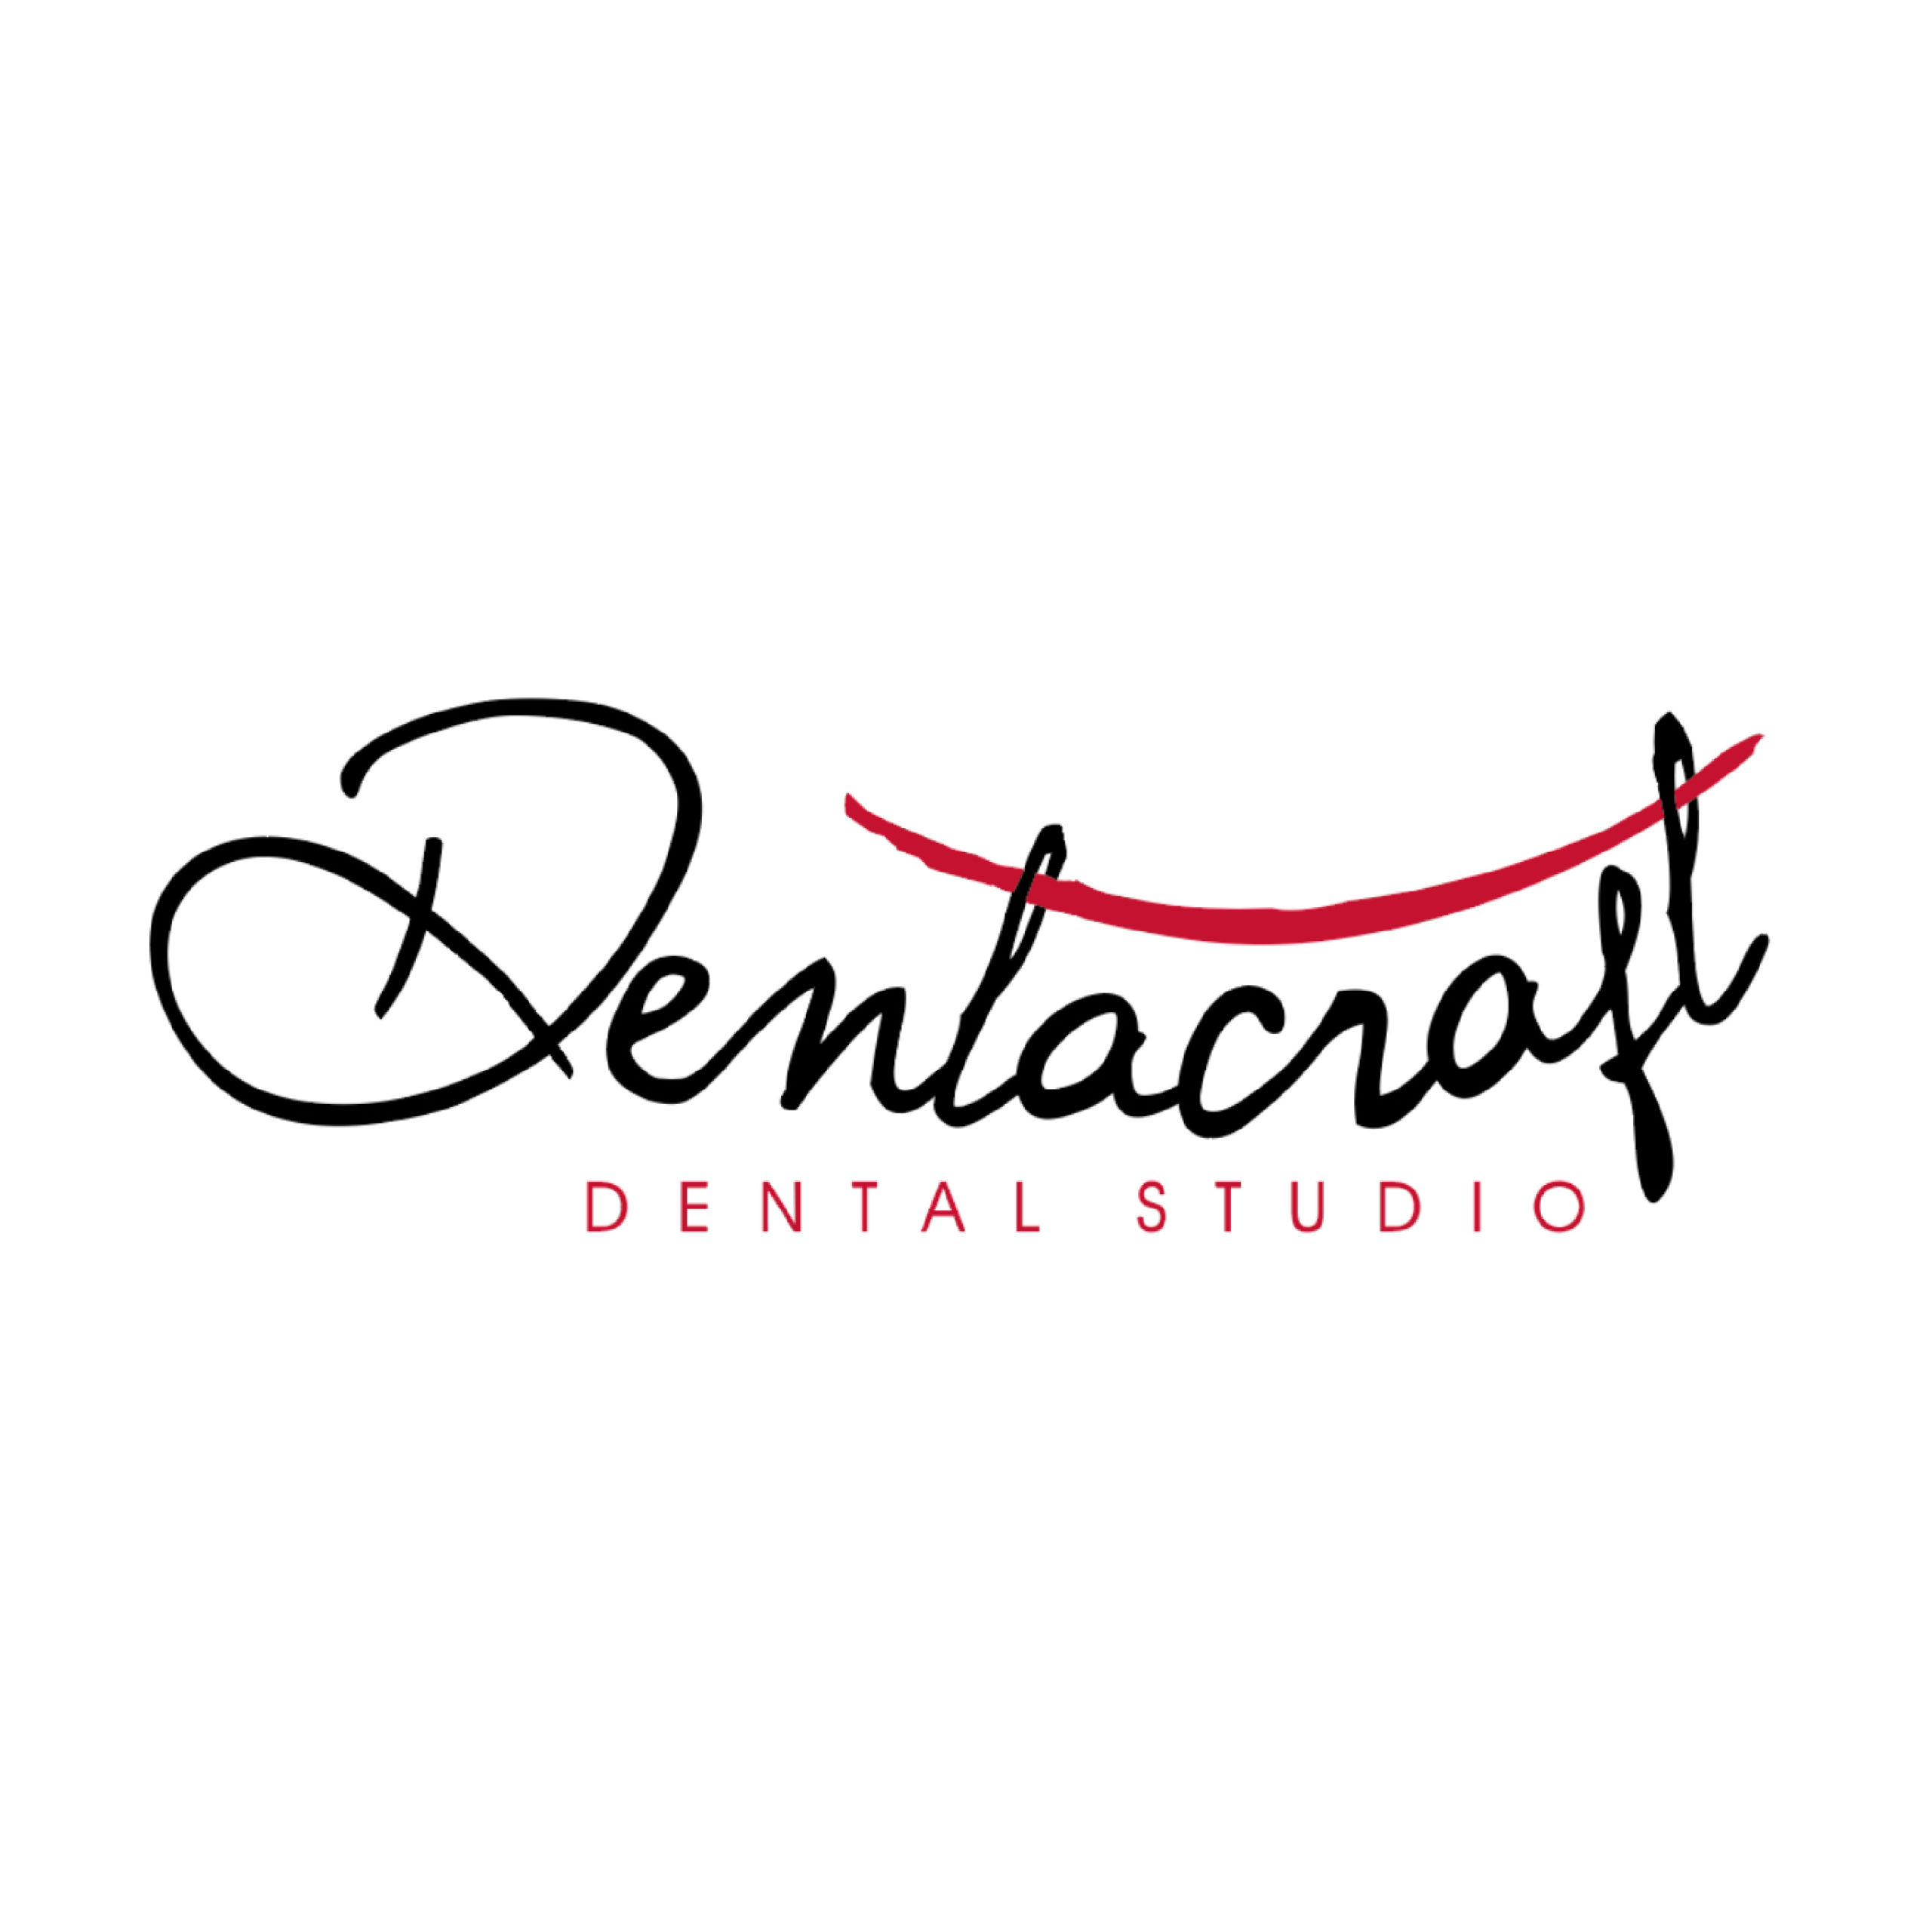 Dentacraft Dental studio Logo | Brand Design